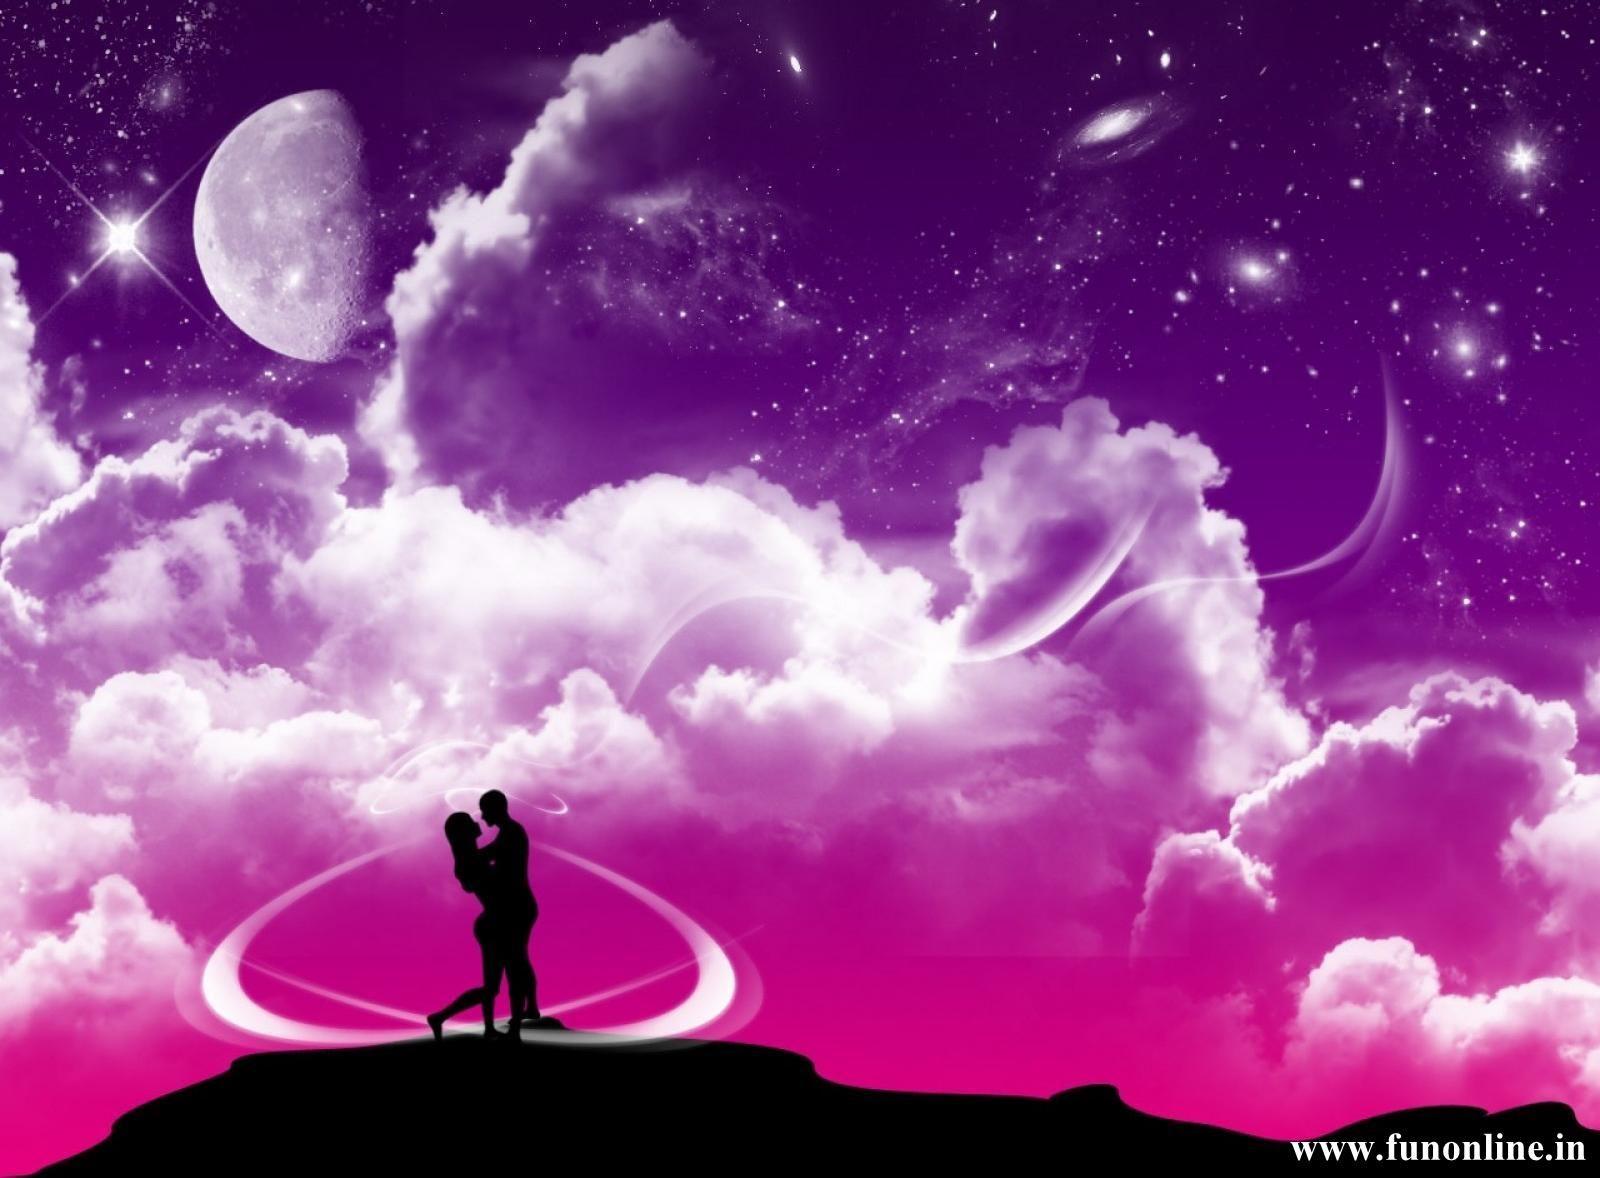 Romantic And Love Wallpaper, HD Romantic And Love Wallpaper